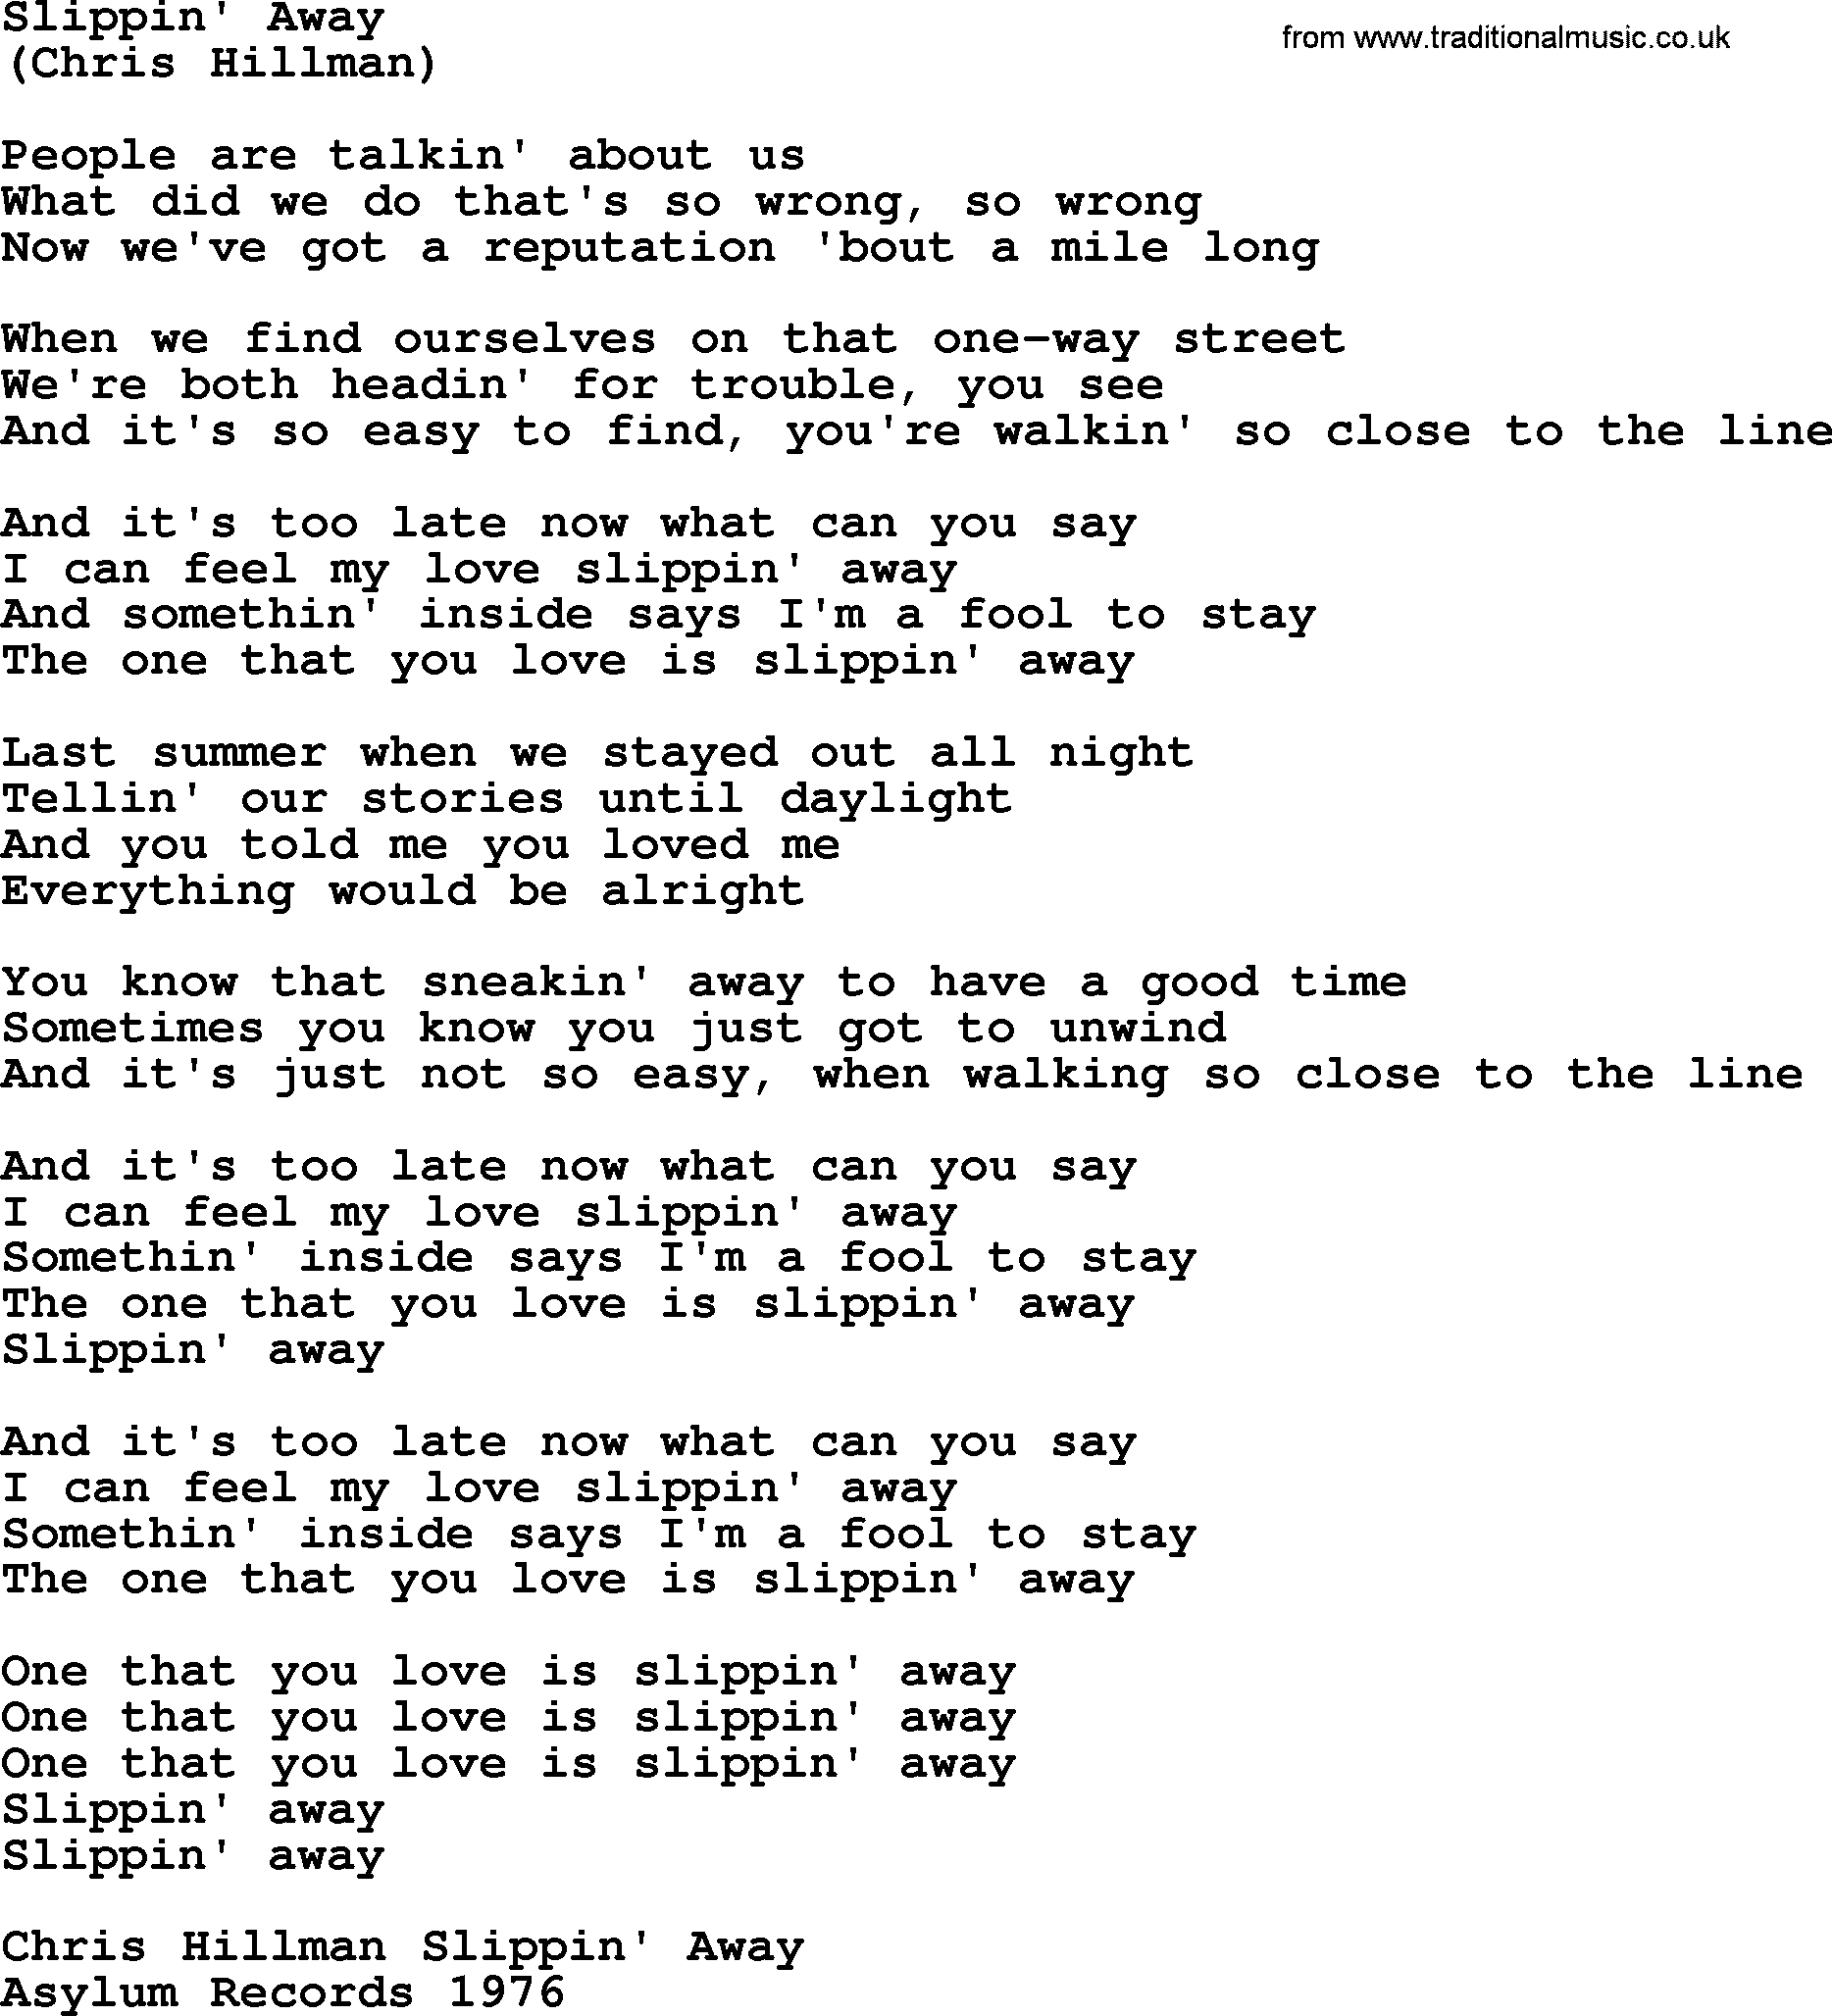 The Byrds song Slippin' Away, lyrics